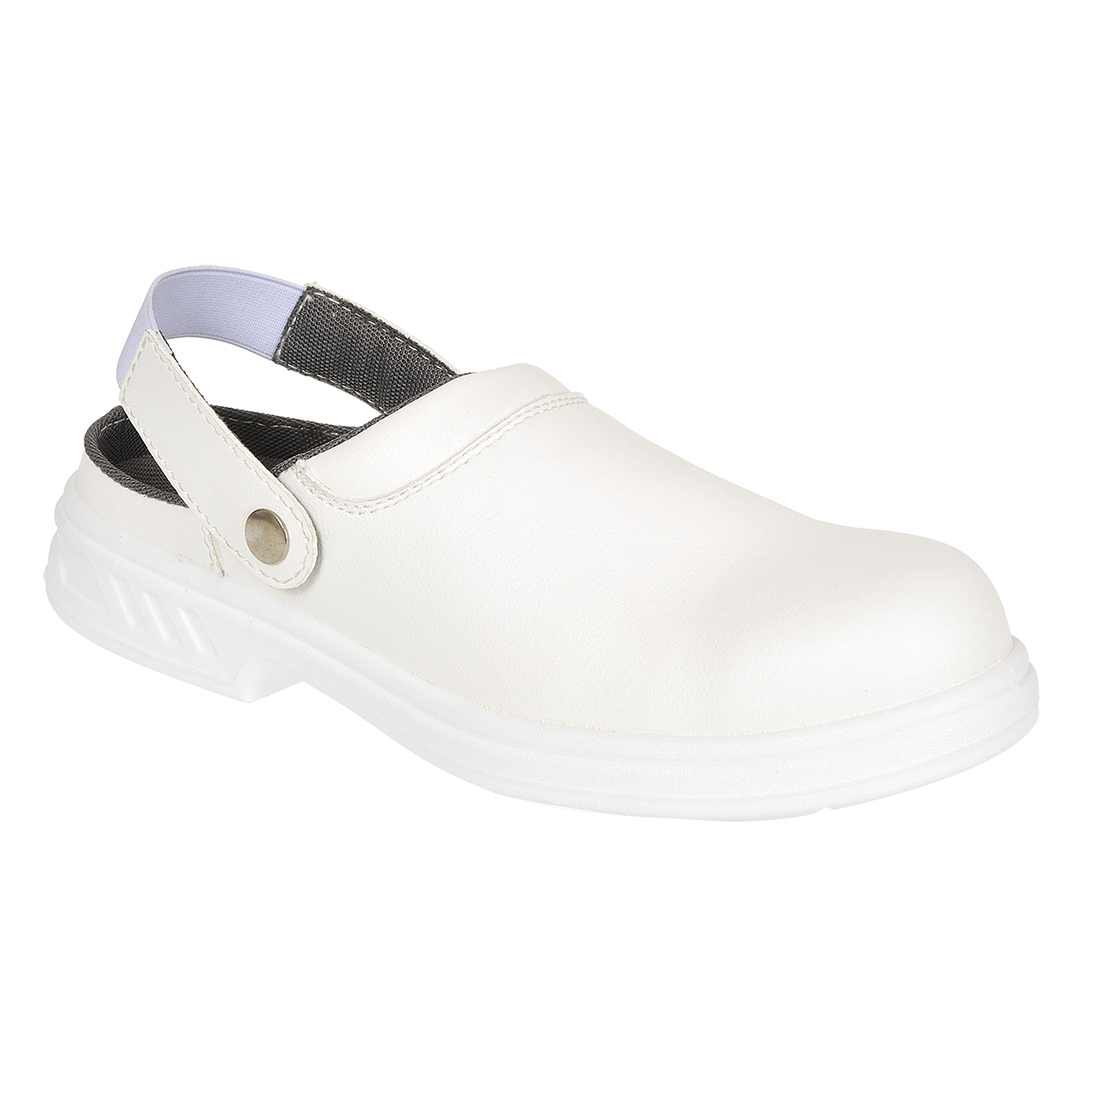 Pracovní sandál Steelite Safety Clog SB AE WRU Barva: bílá, Velikost: 37